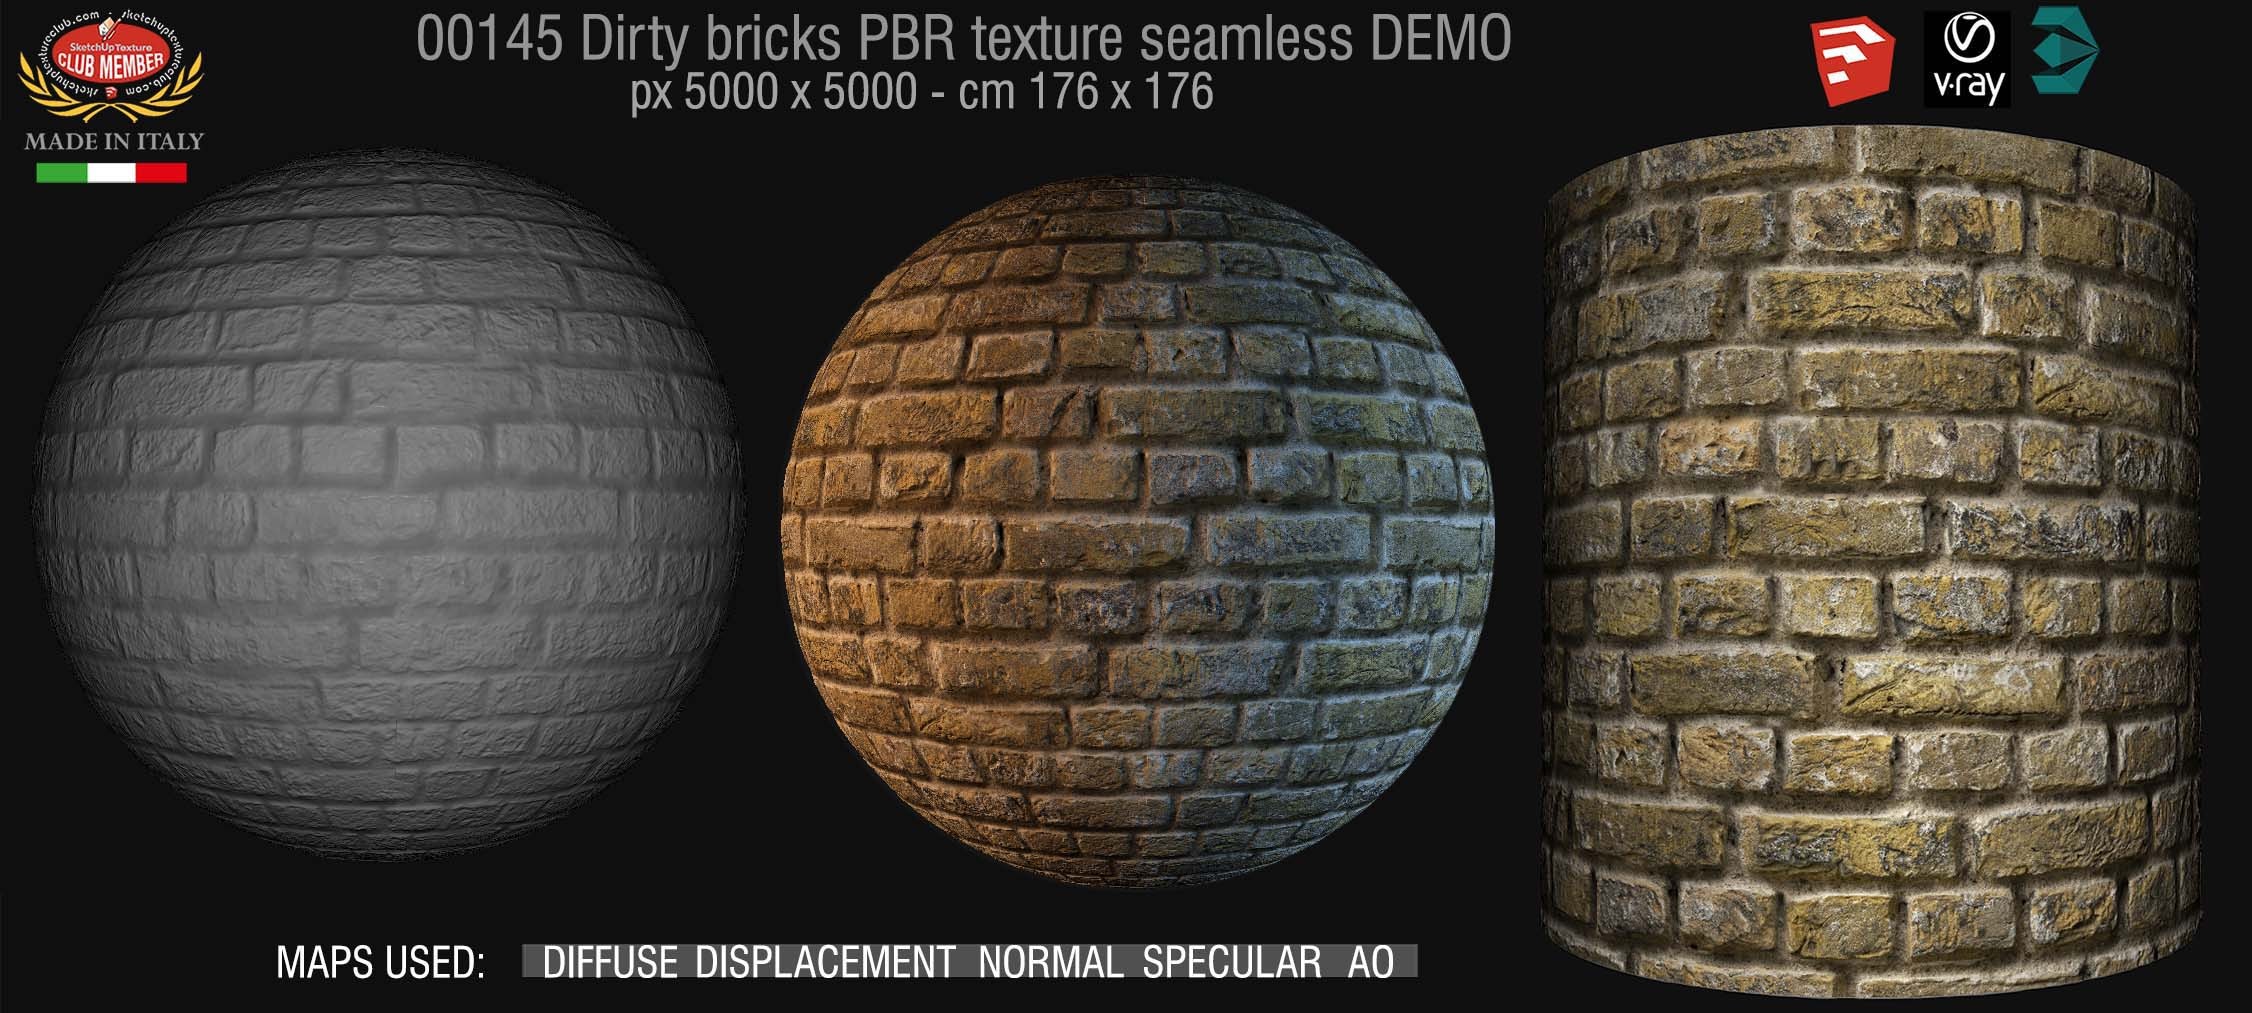 00145 Dirty bricks PBR texture seamless DEMO